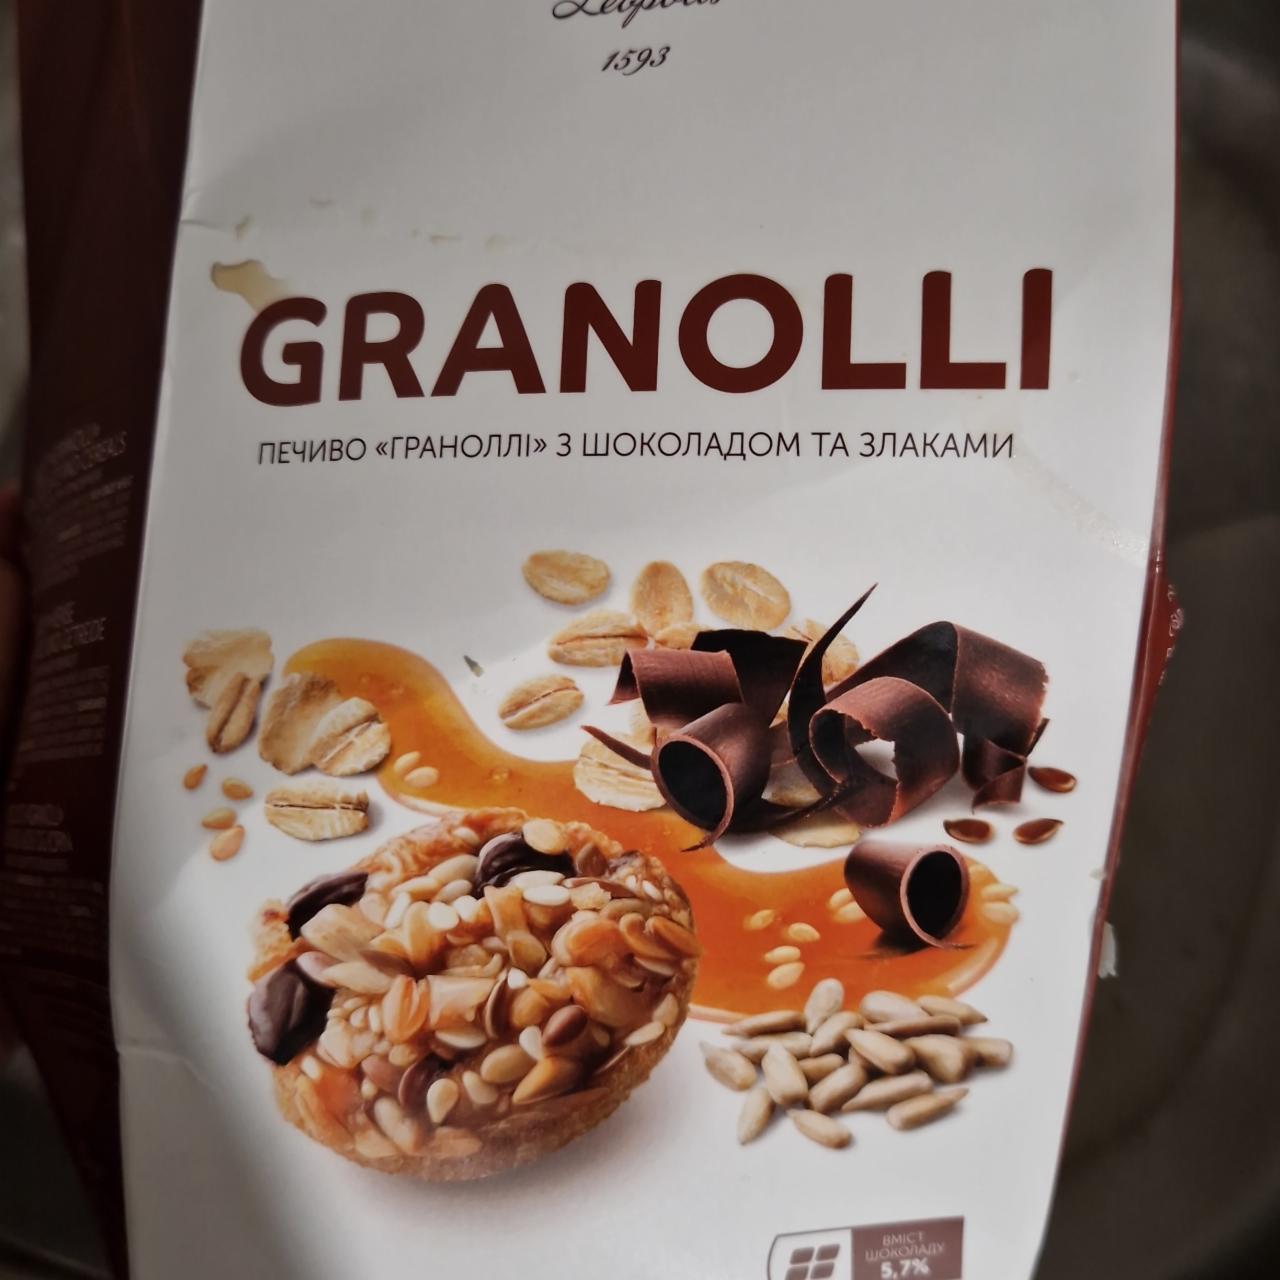 Фото - Печиво з шоколадом та злаками Граноллі Granolli Palazzo Bandinelli